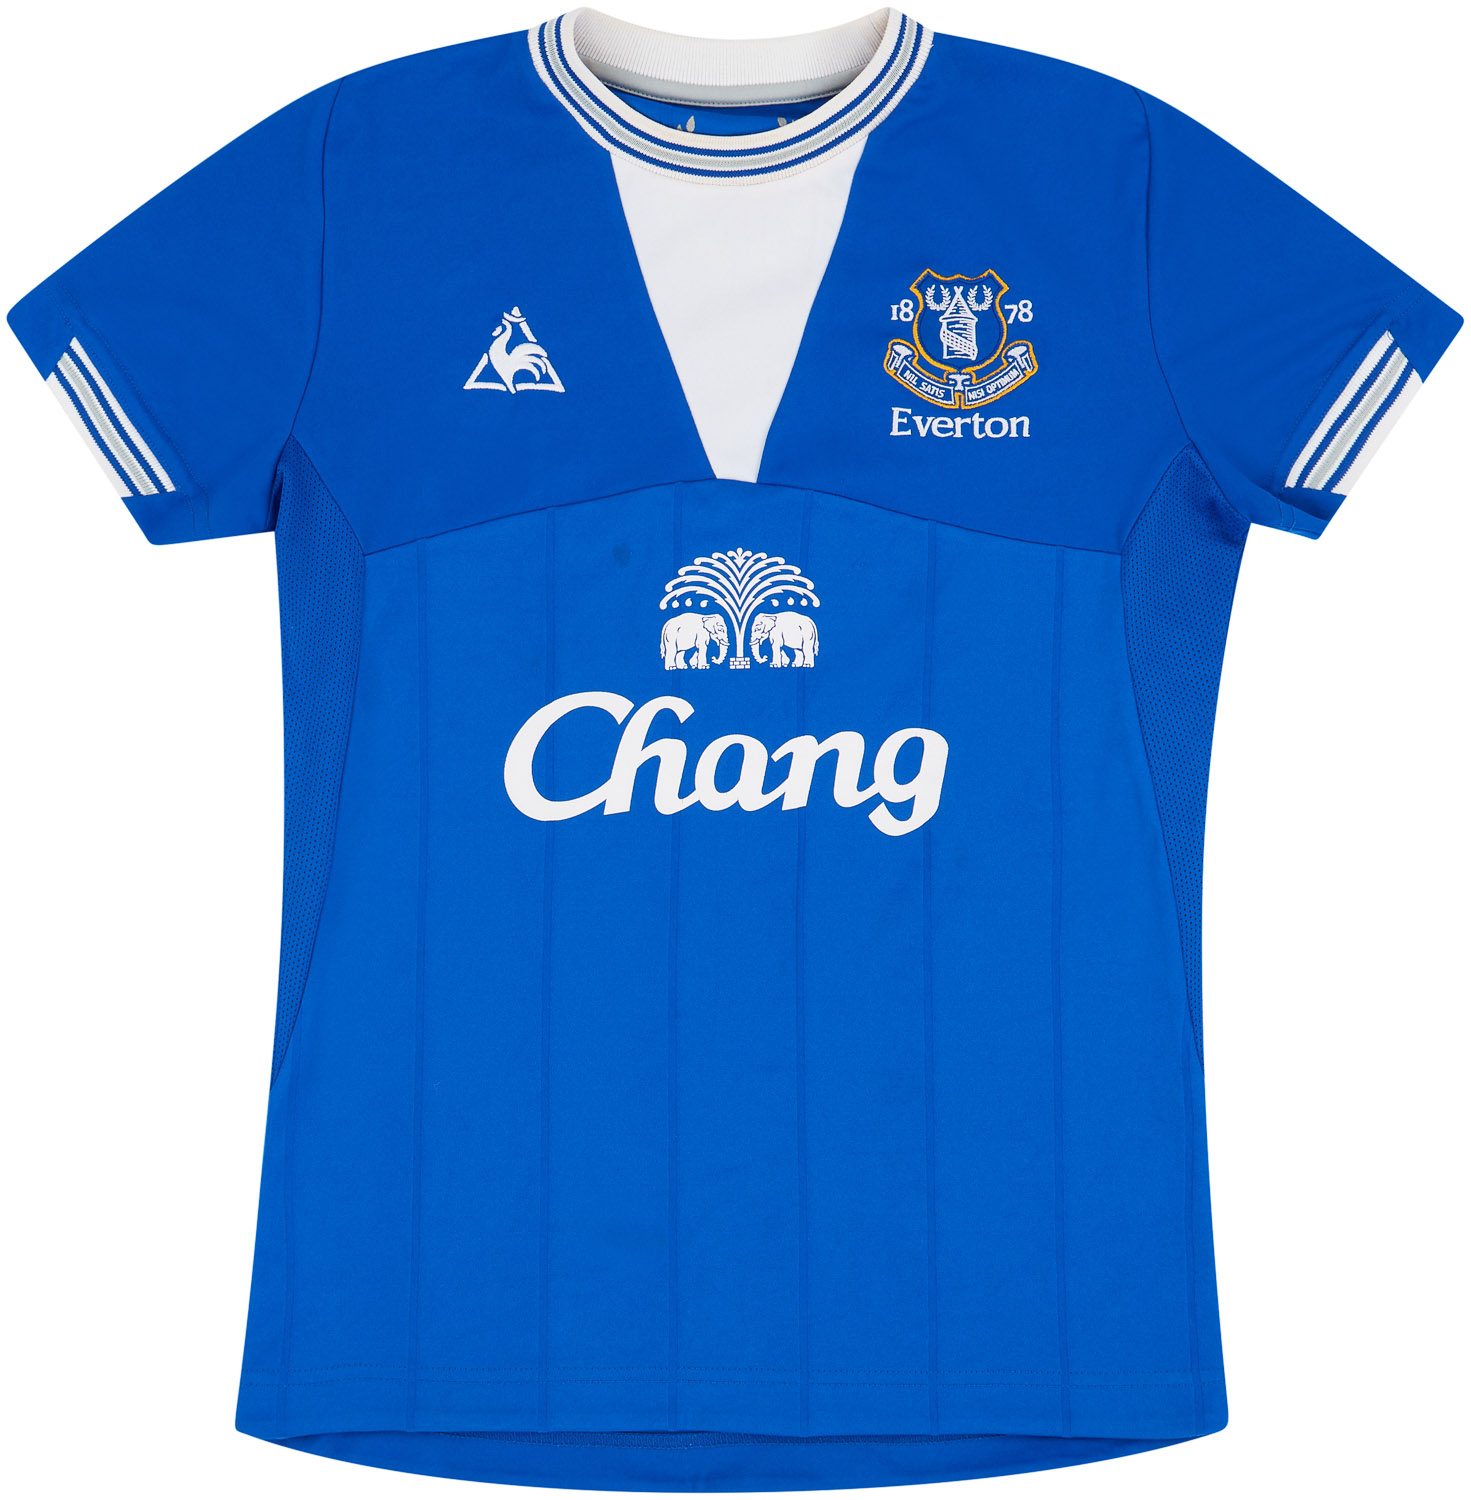 2009-10 Everton Home Shirt Women's ()